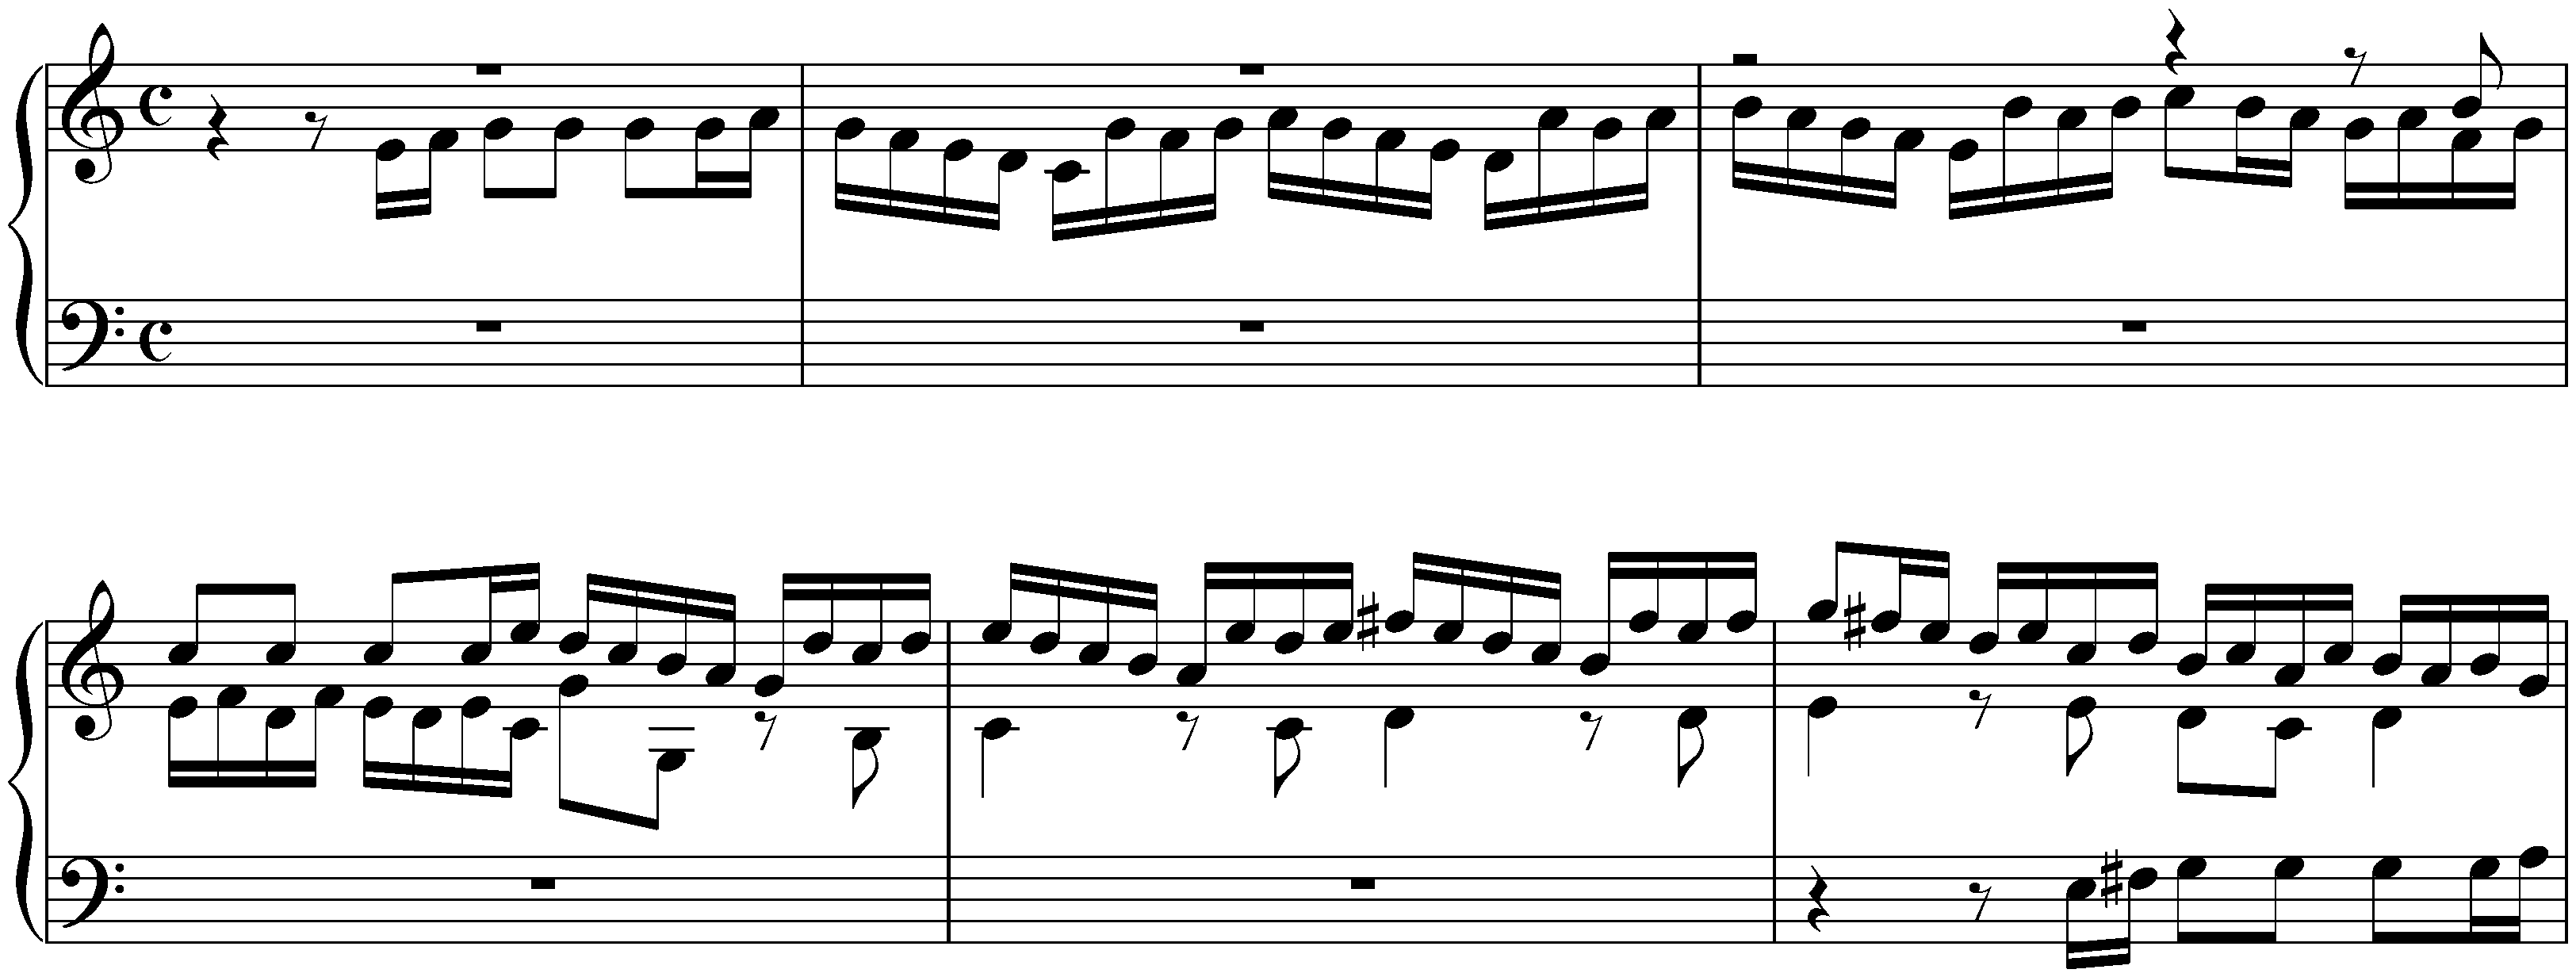 Sonata in C major after Johann Adam Reincken, BWV 966; 2. Fuga